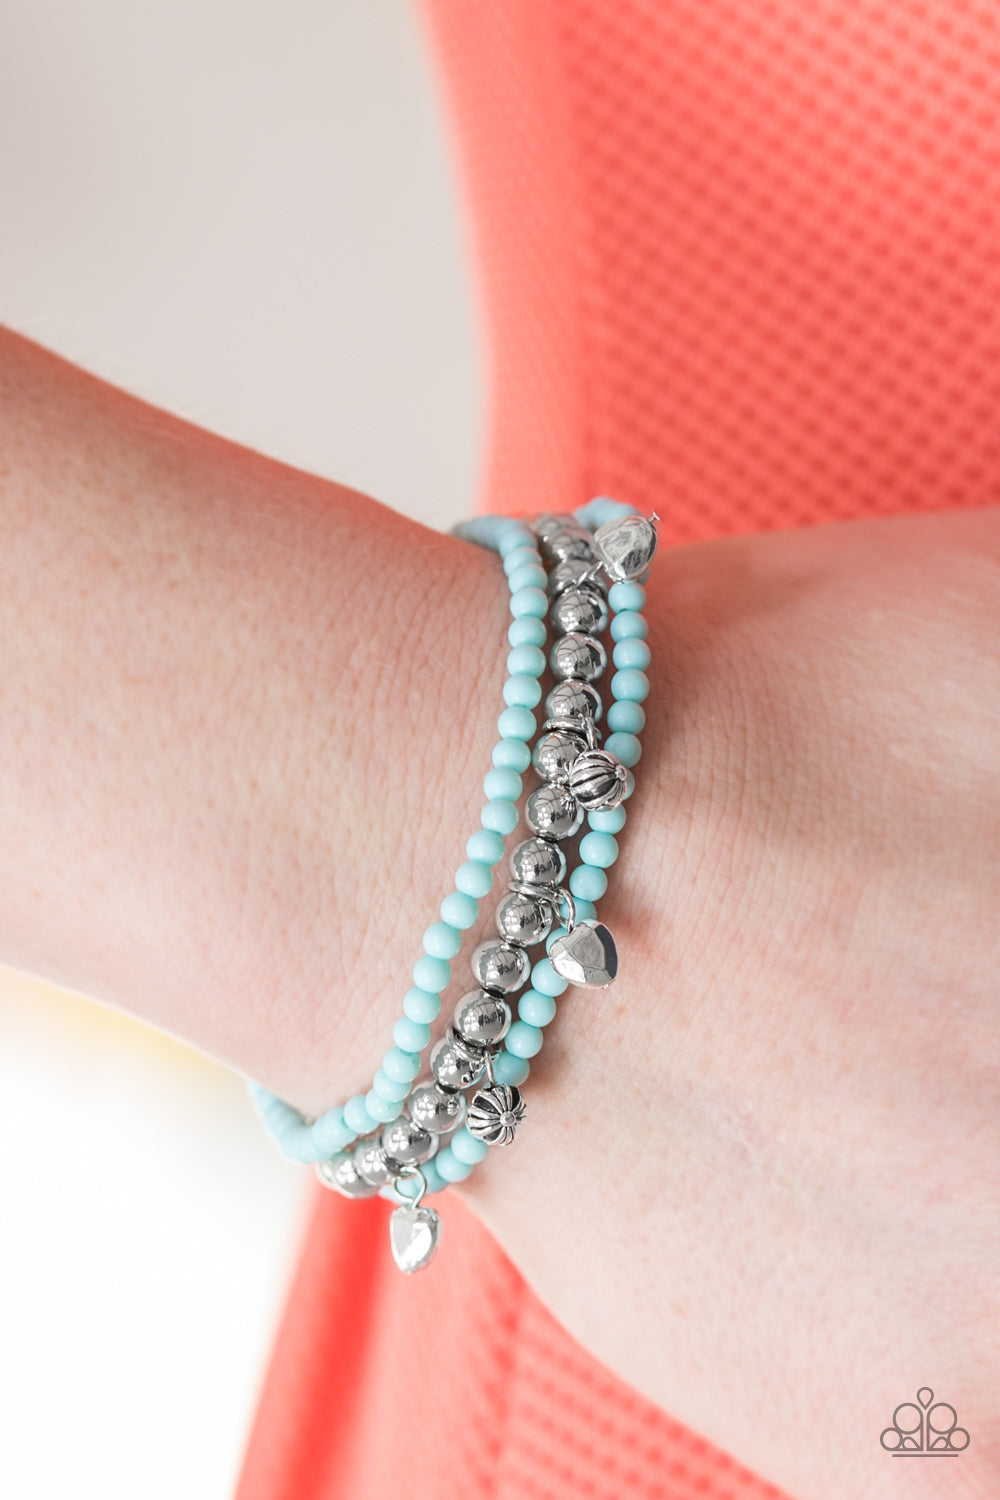 Paparazzi Springtime Sweethearts - Blue - Silver Beads - Set of 3 Stretchy Bracelets - $5 Jewelry With Ashley Swint